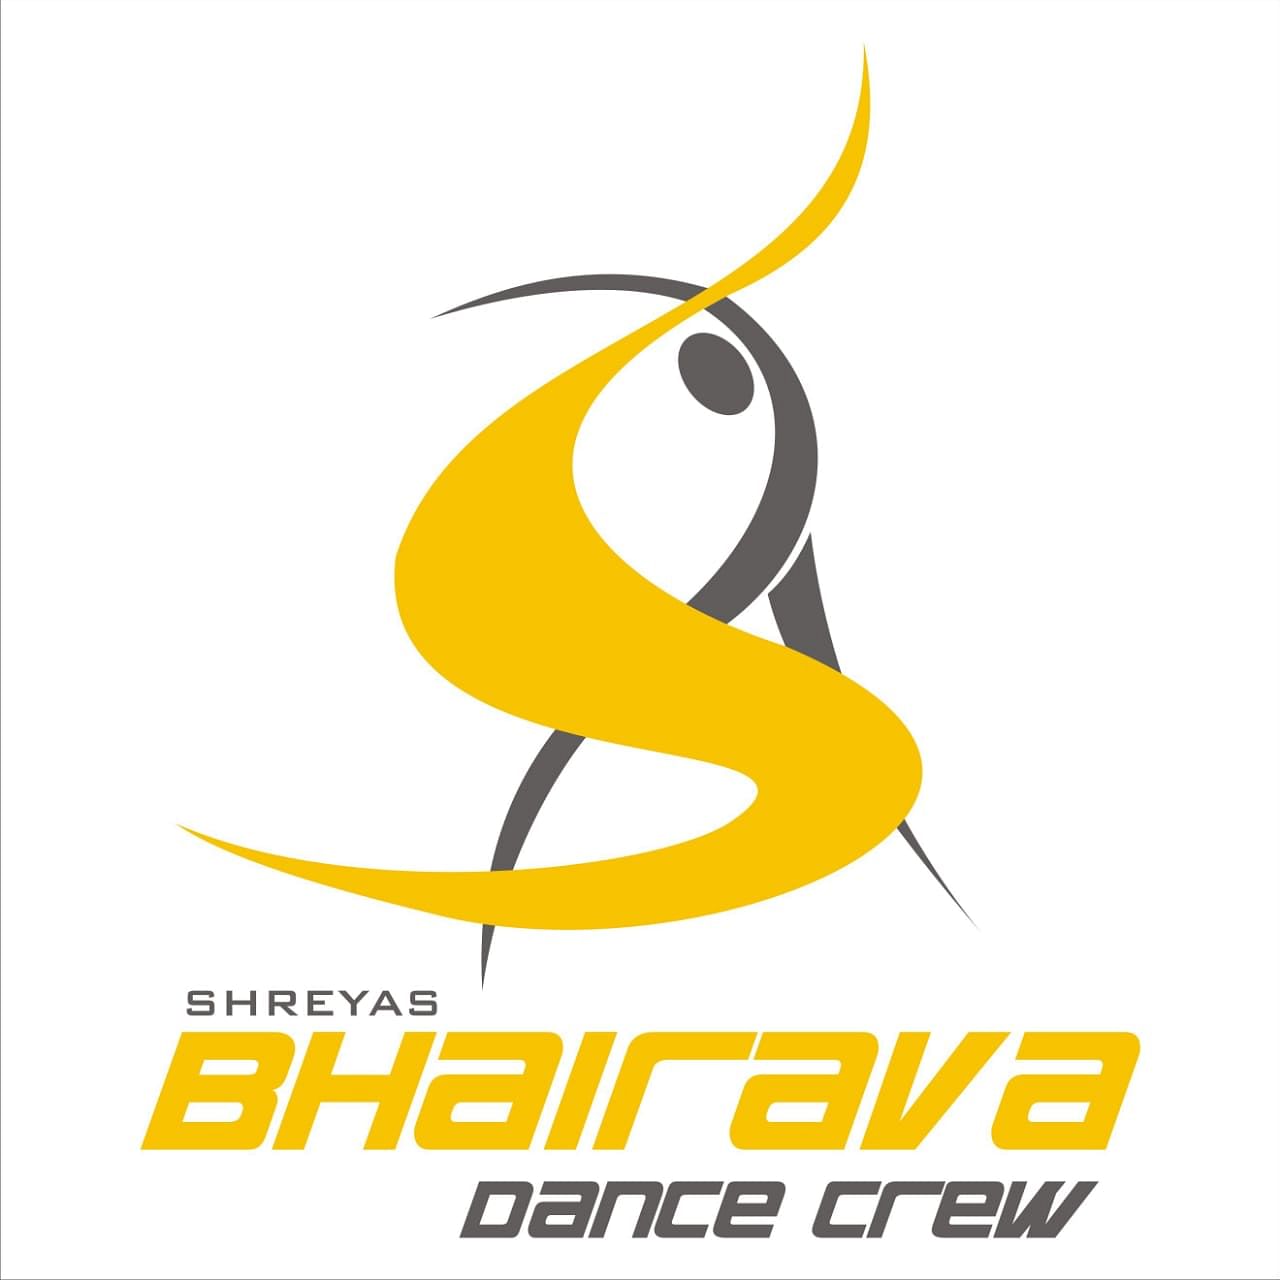 Shreyas Bhairava Dance Crew Hmt Layout